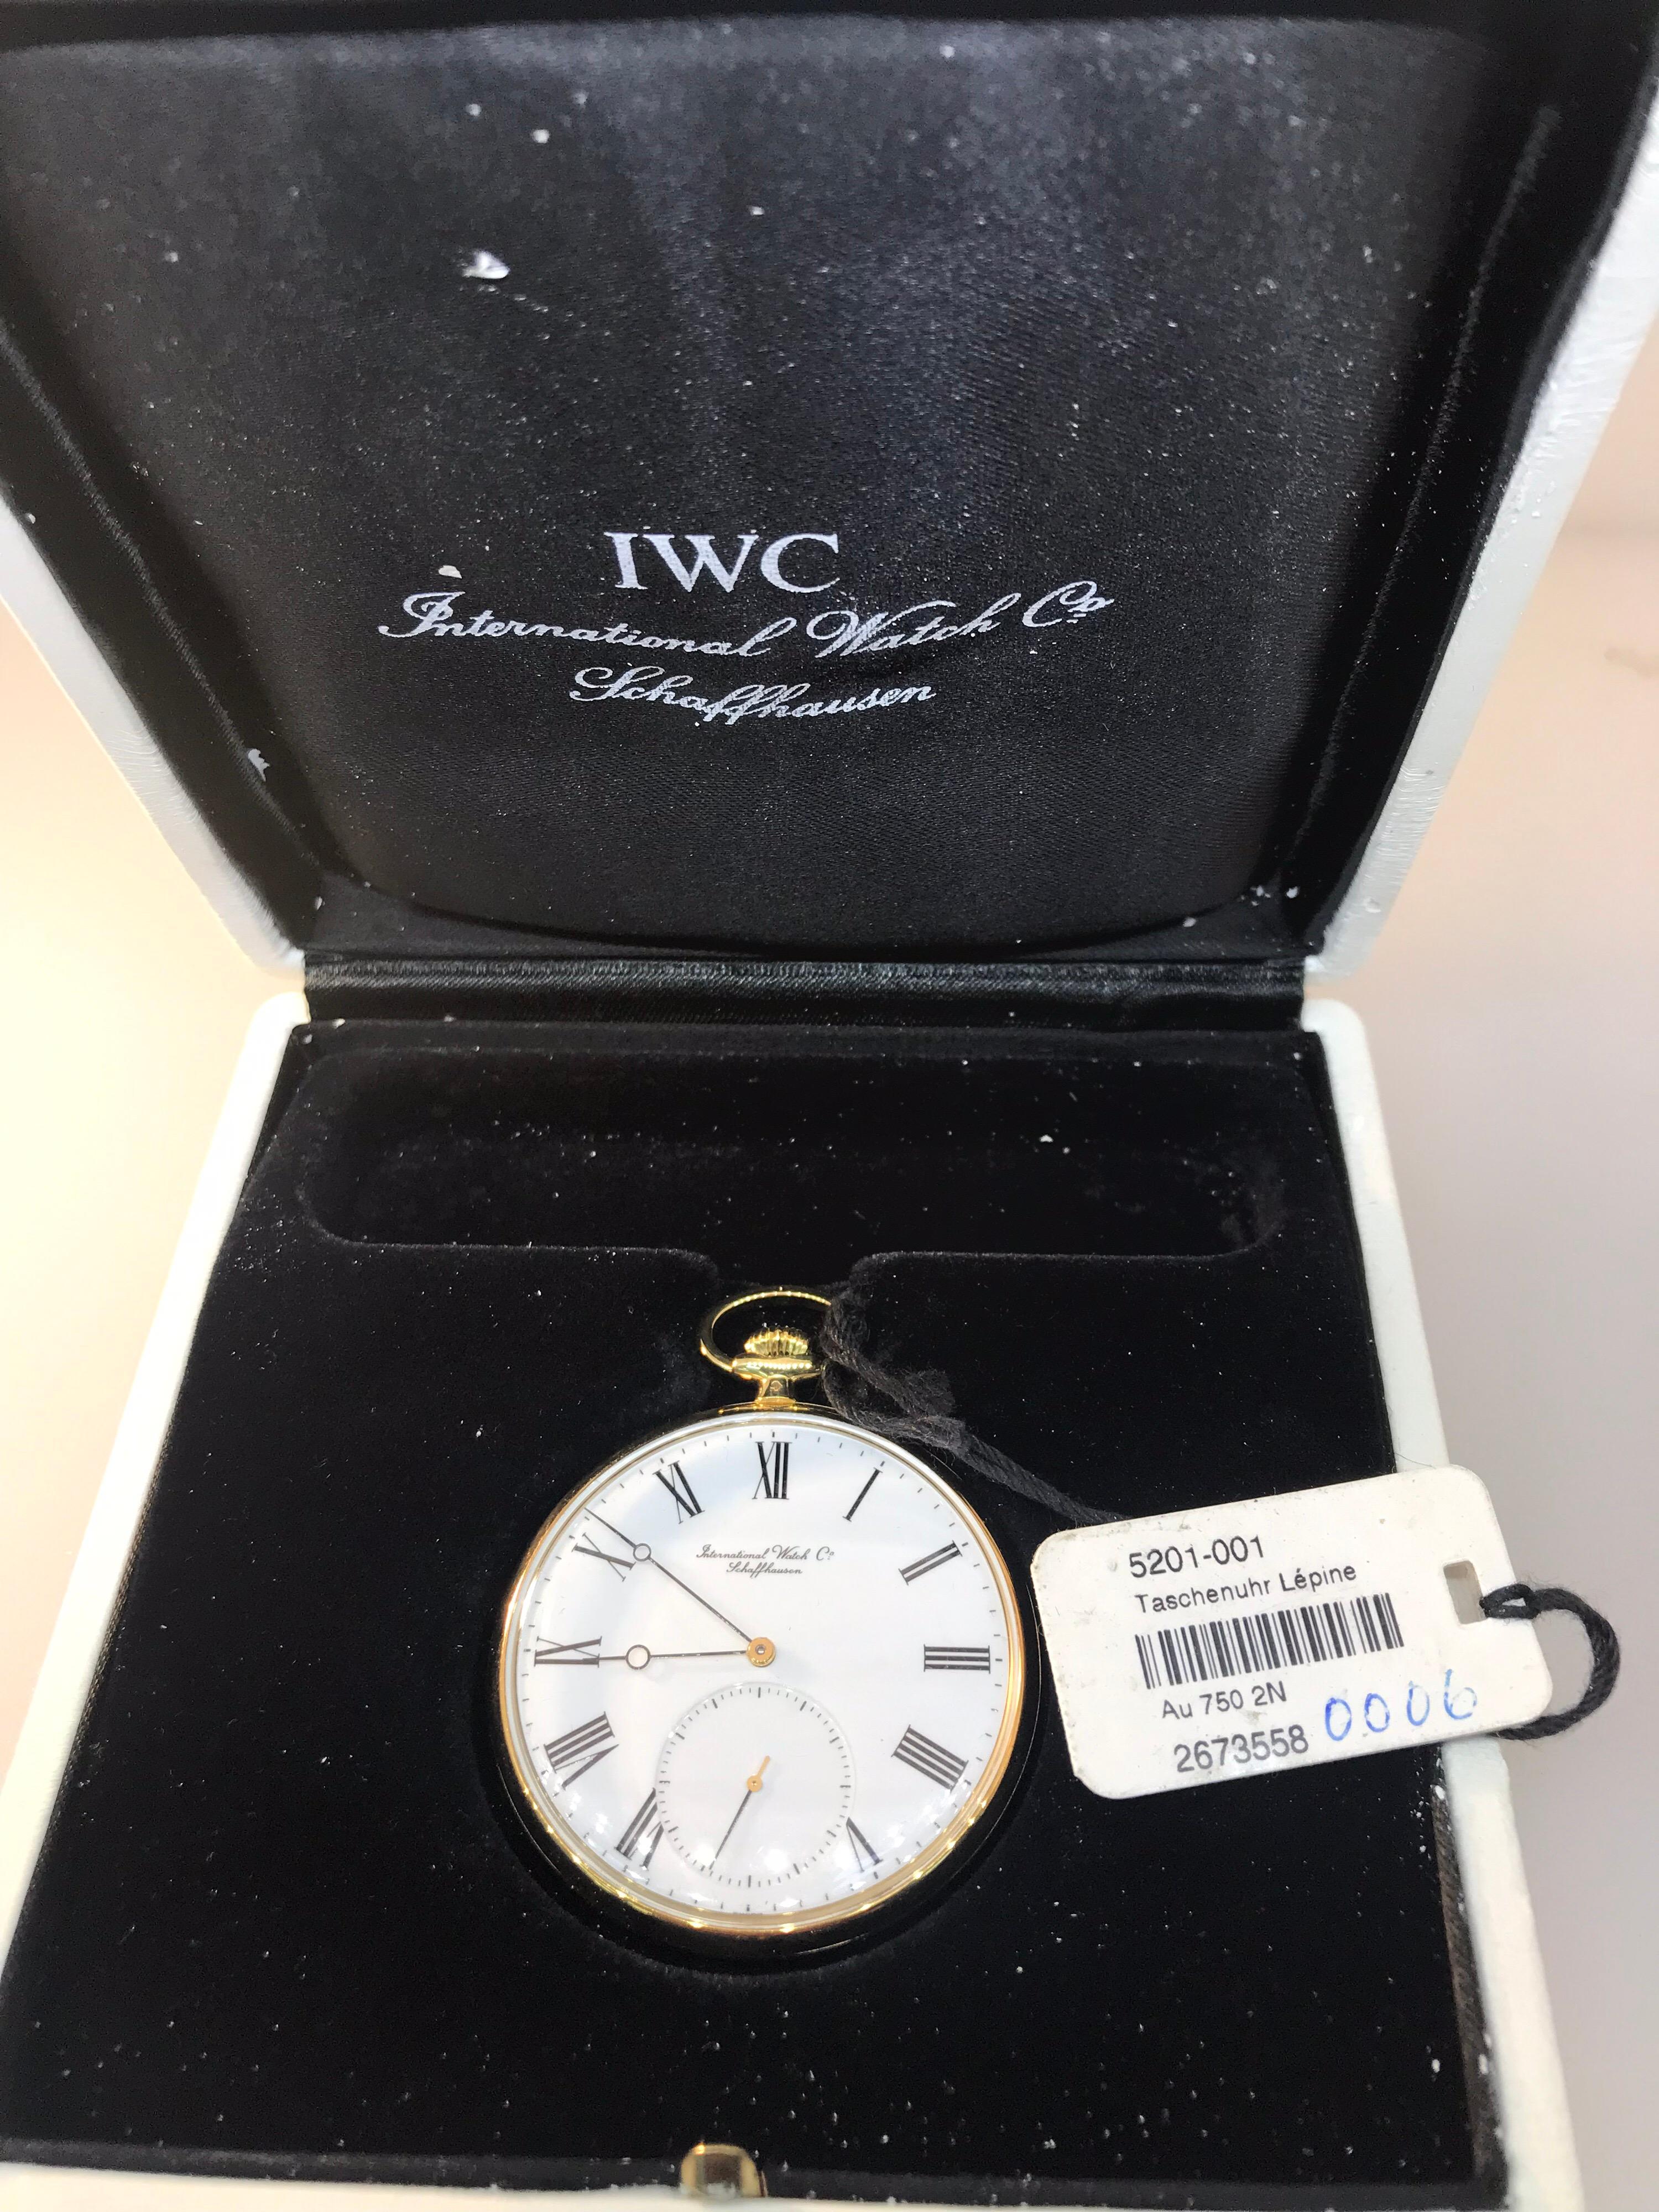 IWC Schaffhausen Lepine Yellow Gold White Dial Pocket Watch Men's Watch 5201-001 For Sale 4